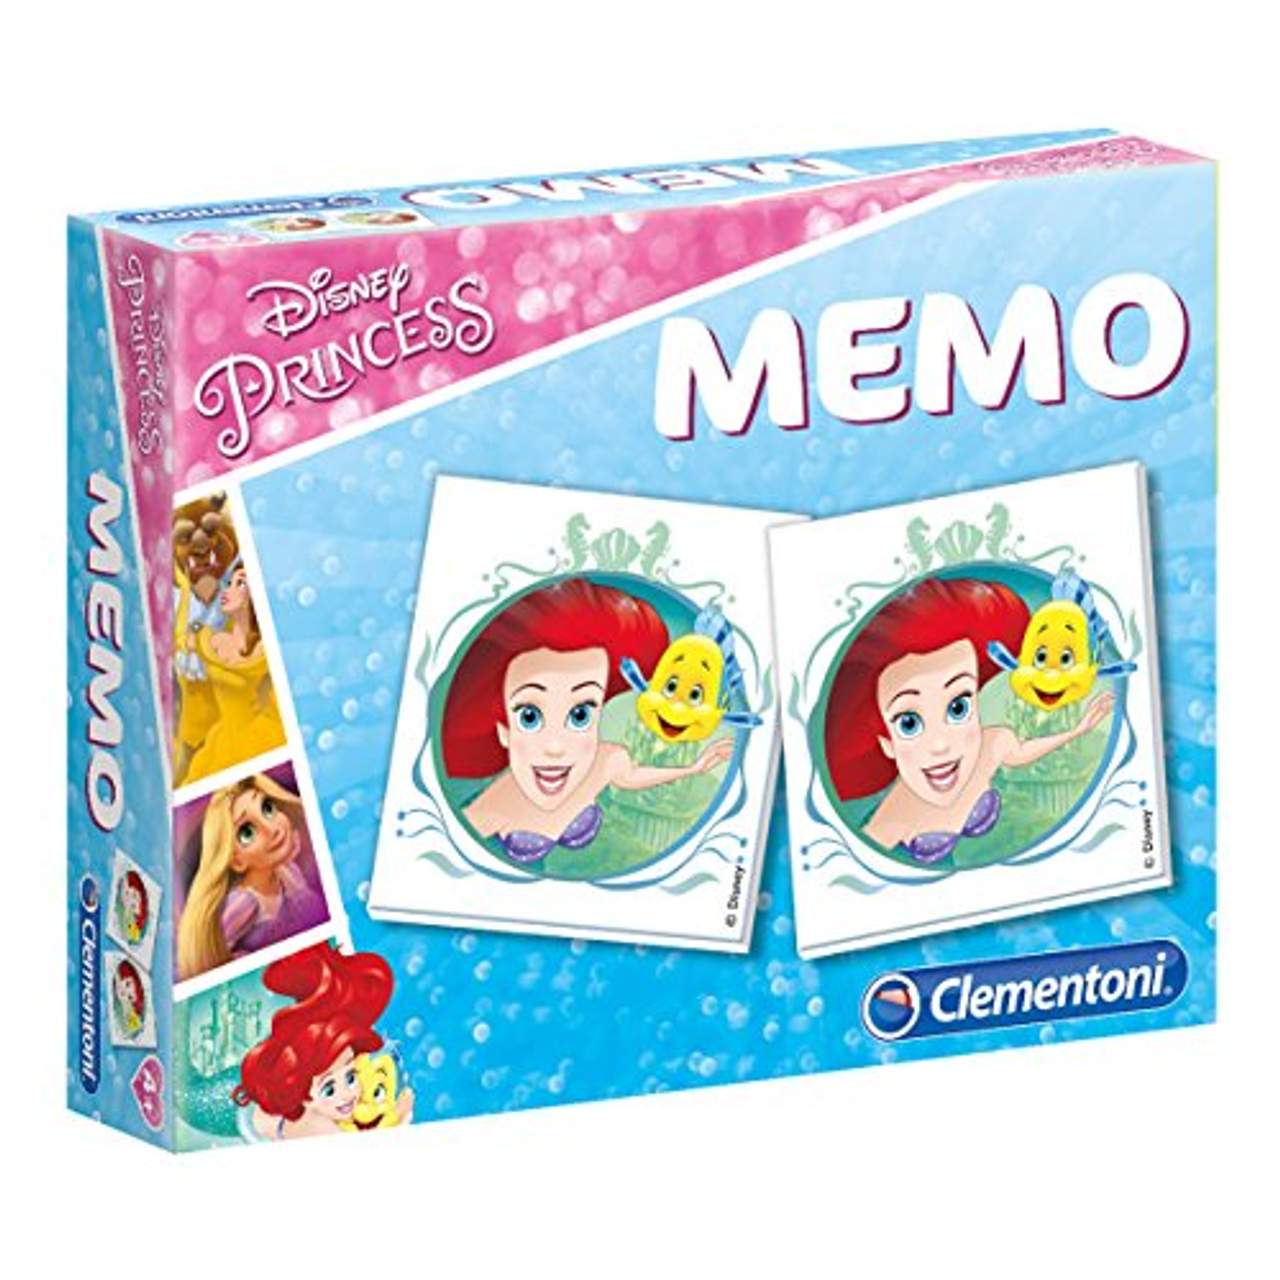 Clementoni 13487.8 Memo kompakt Disney Princess Spiel